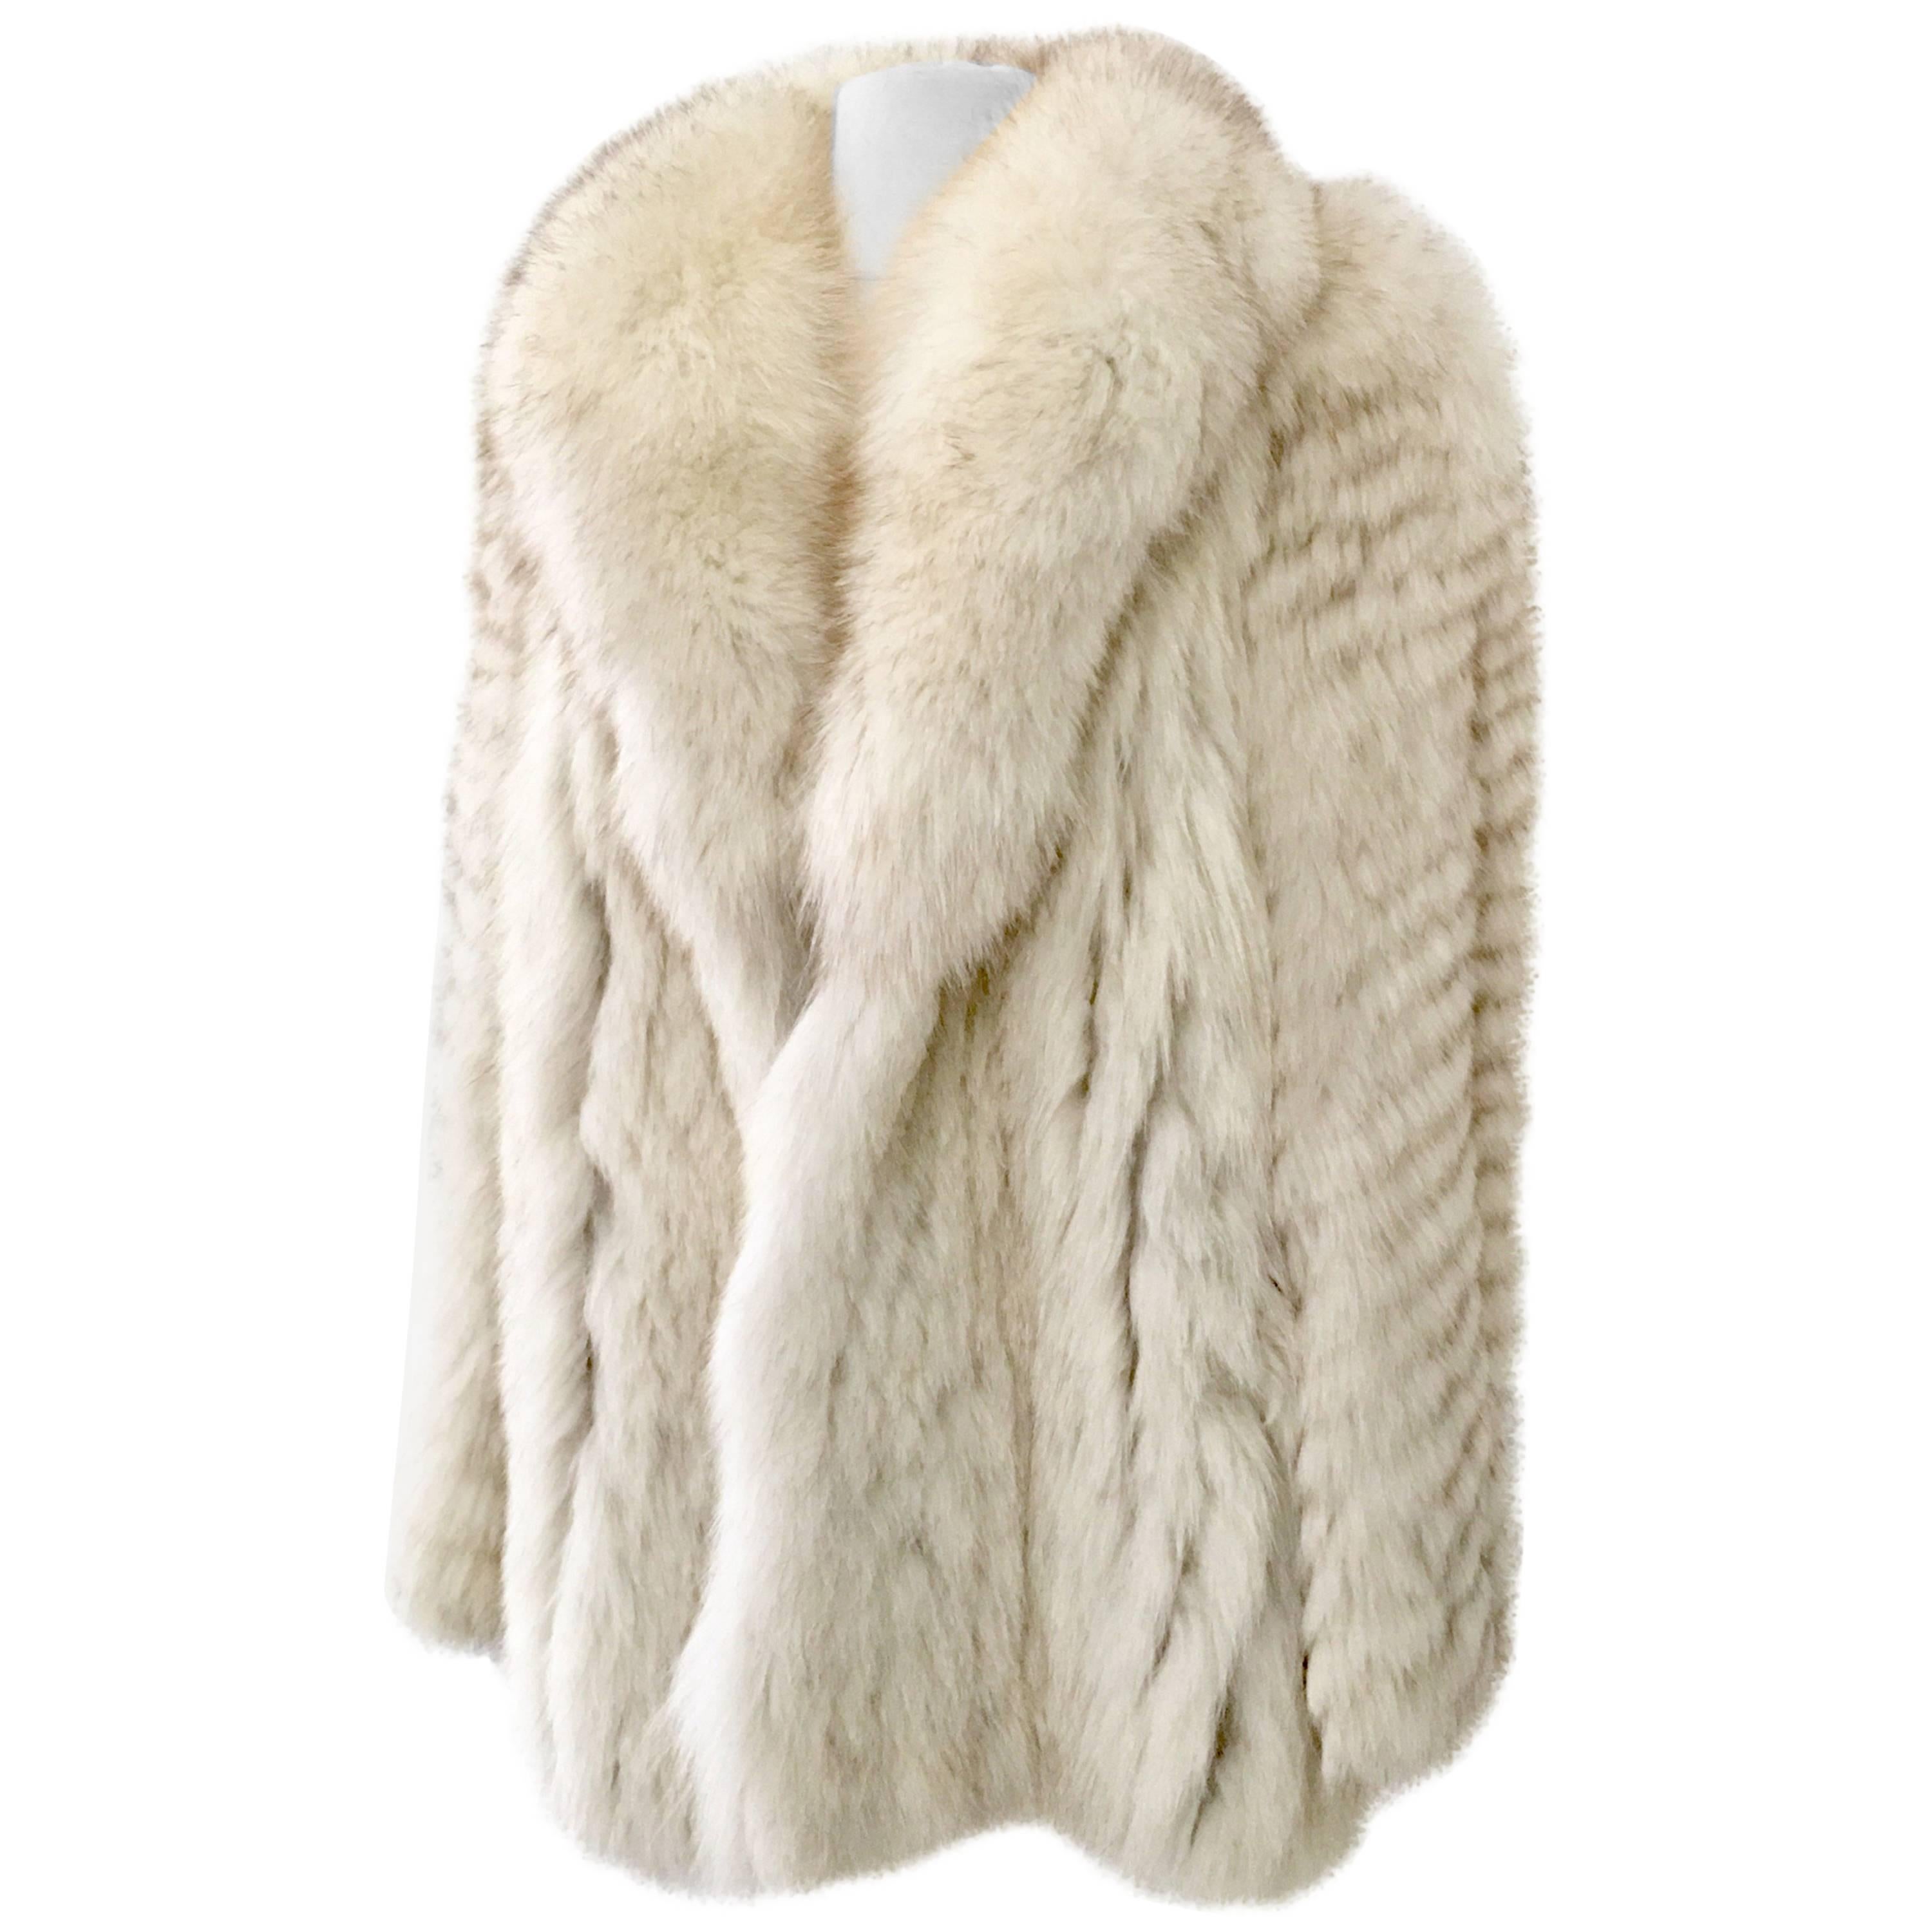 VIntage Winter White Fox Fur Coat